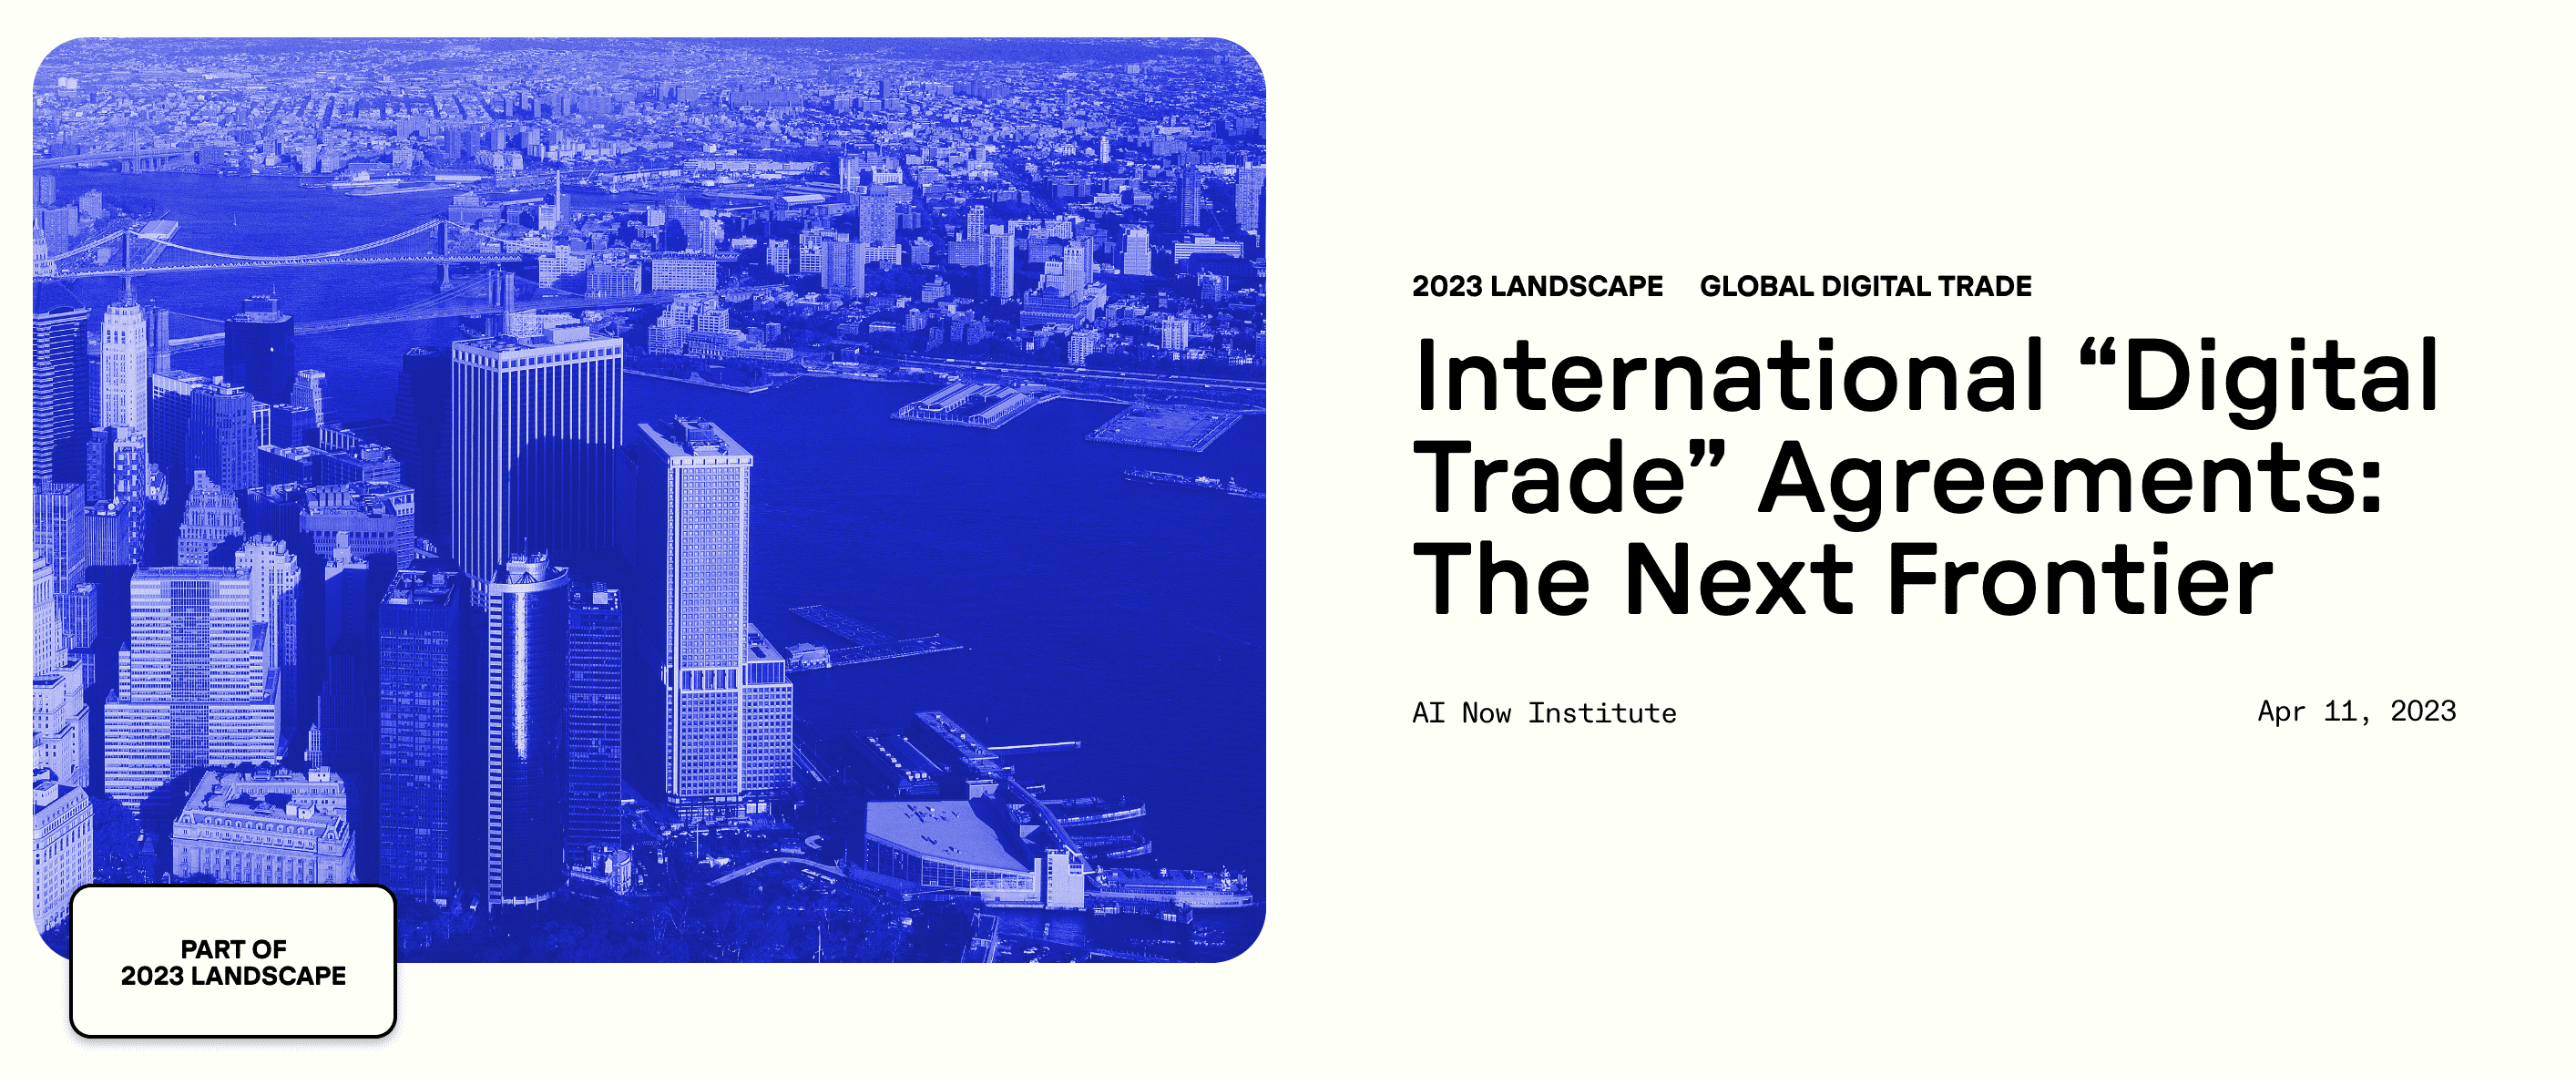 2023 LANDSCAPE GLOBAL DIGITAL TRADE International “Digital Trade” Agreements: The Next Frontier